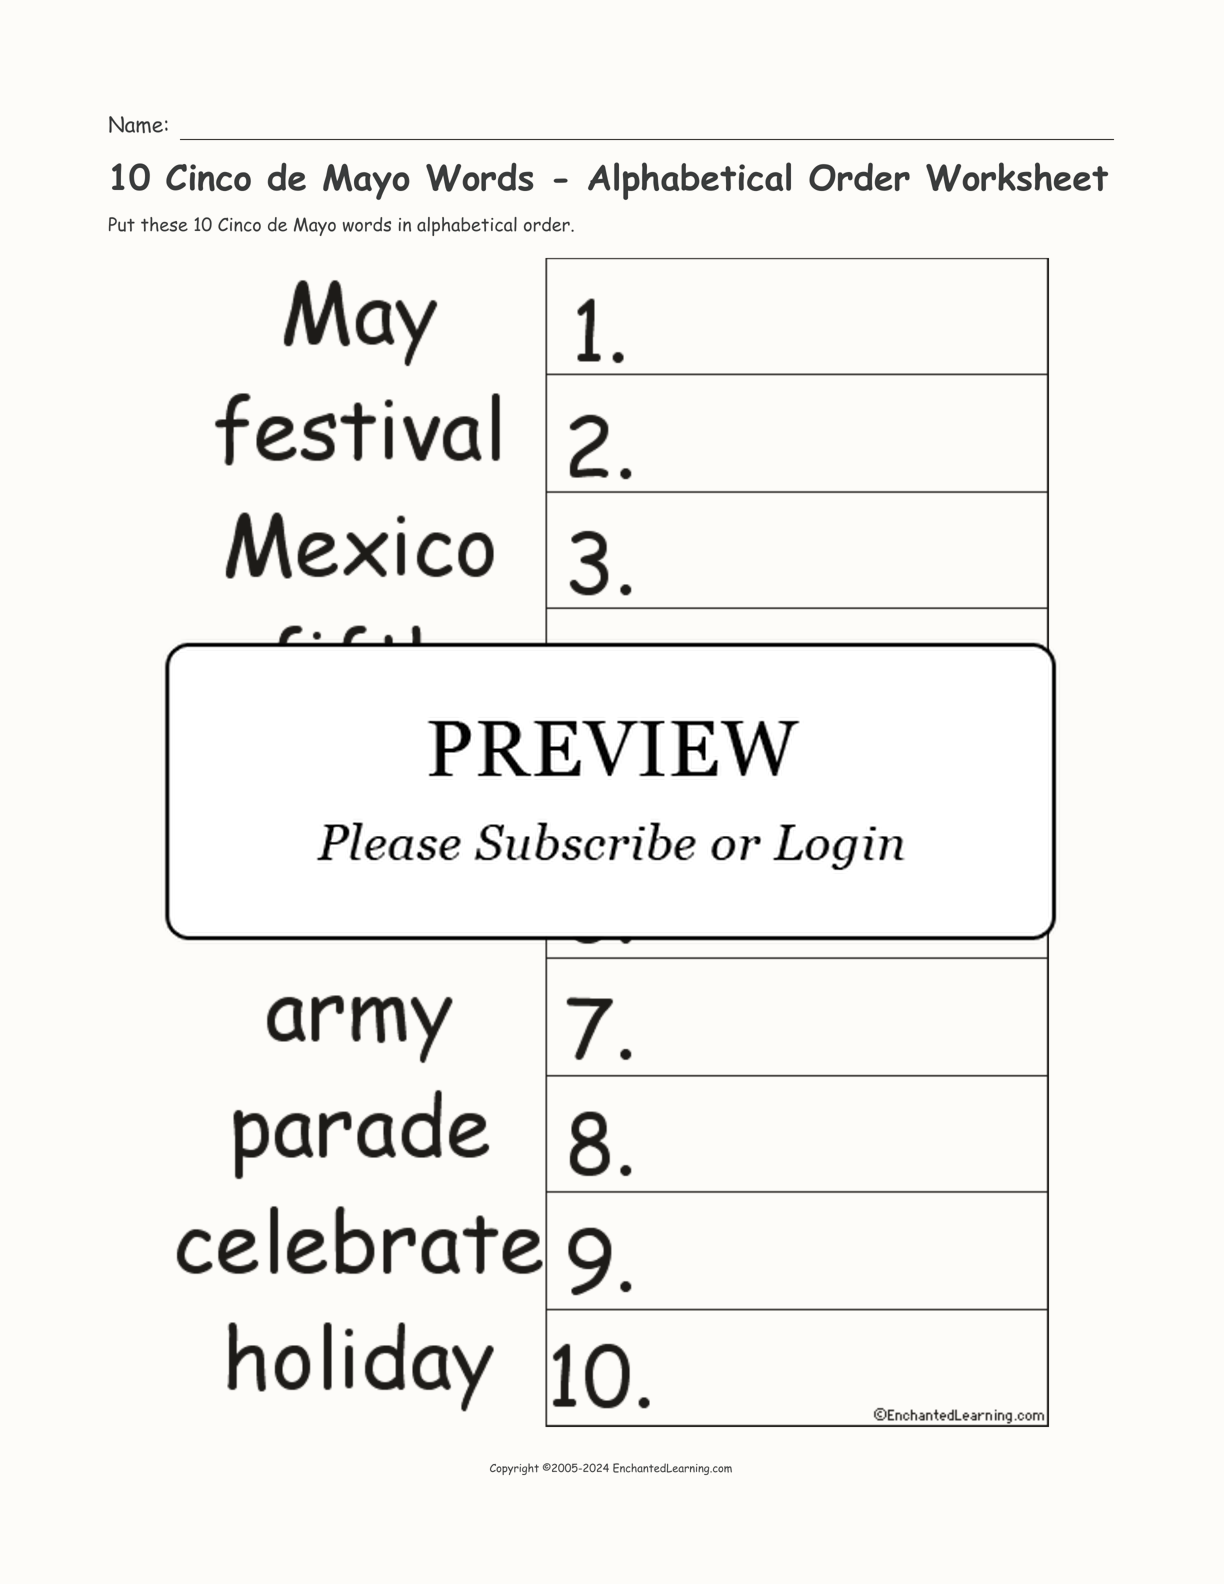 10 Cinco de Mayo Words - Alphabetical Order Worksheet interactive worksheet page 1